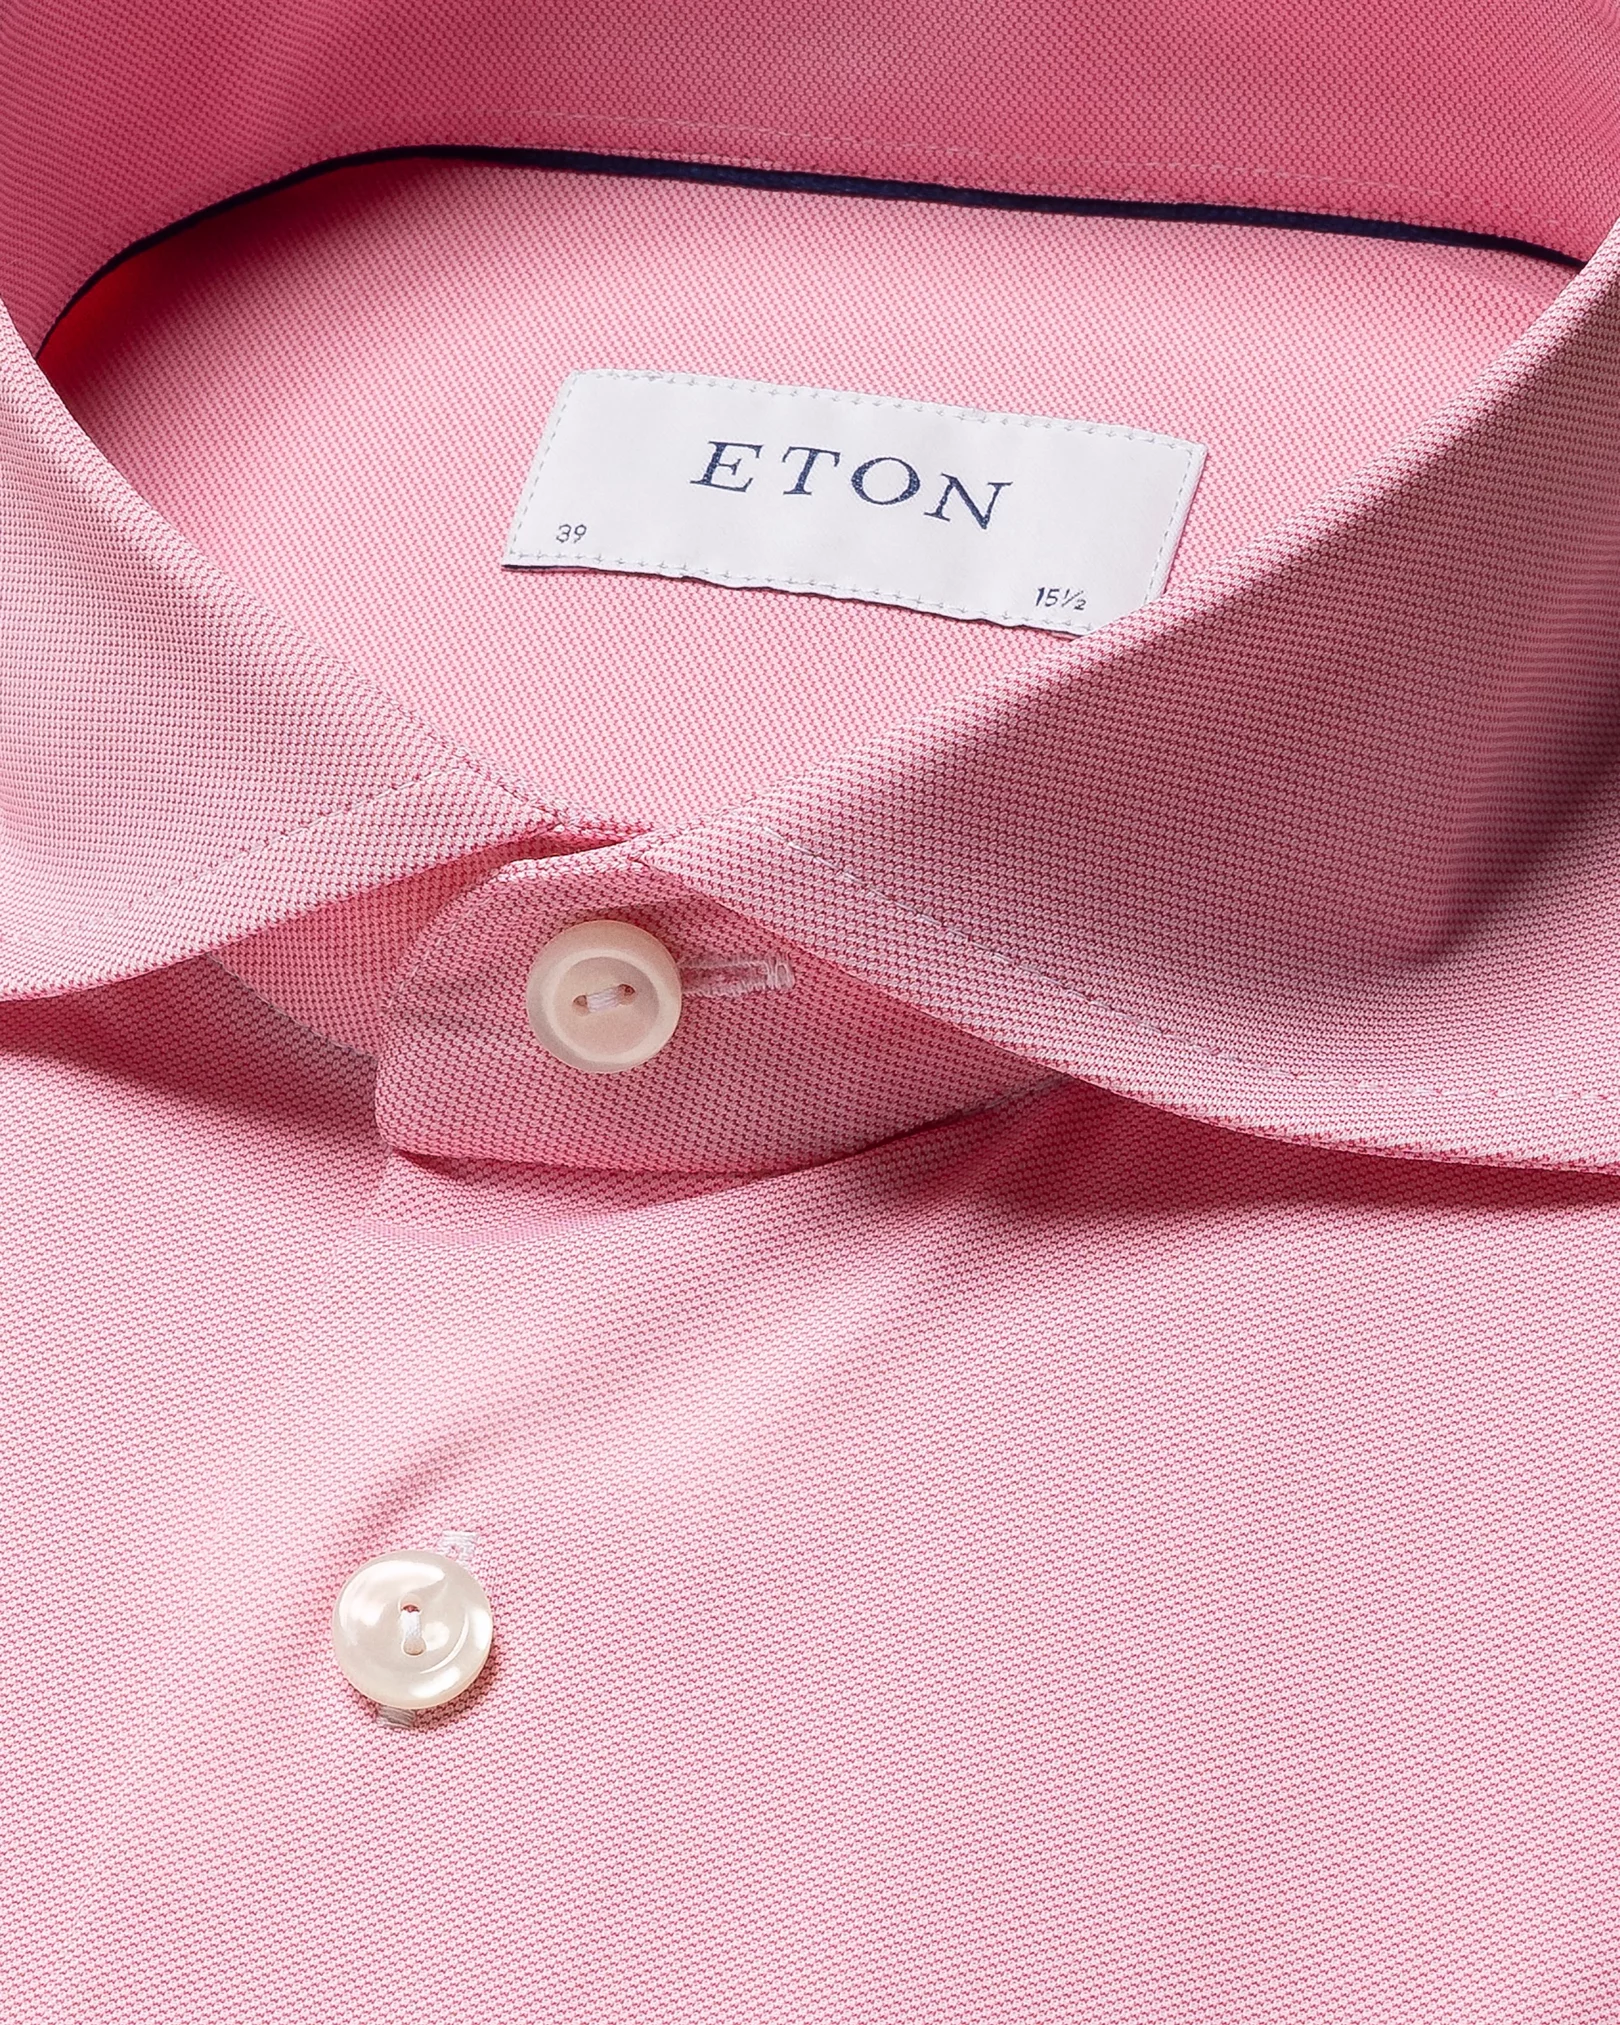 Eton - pink 4 way stretch wide spread